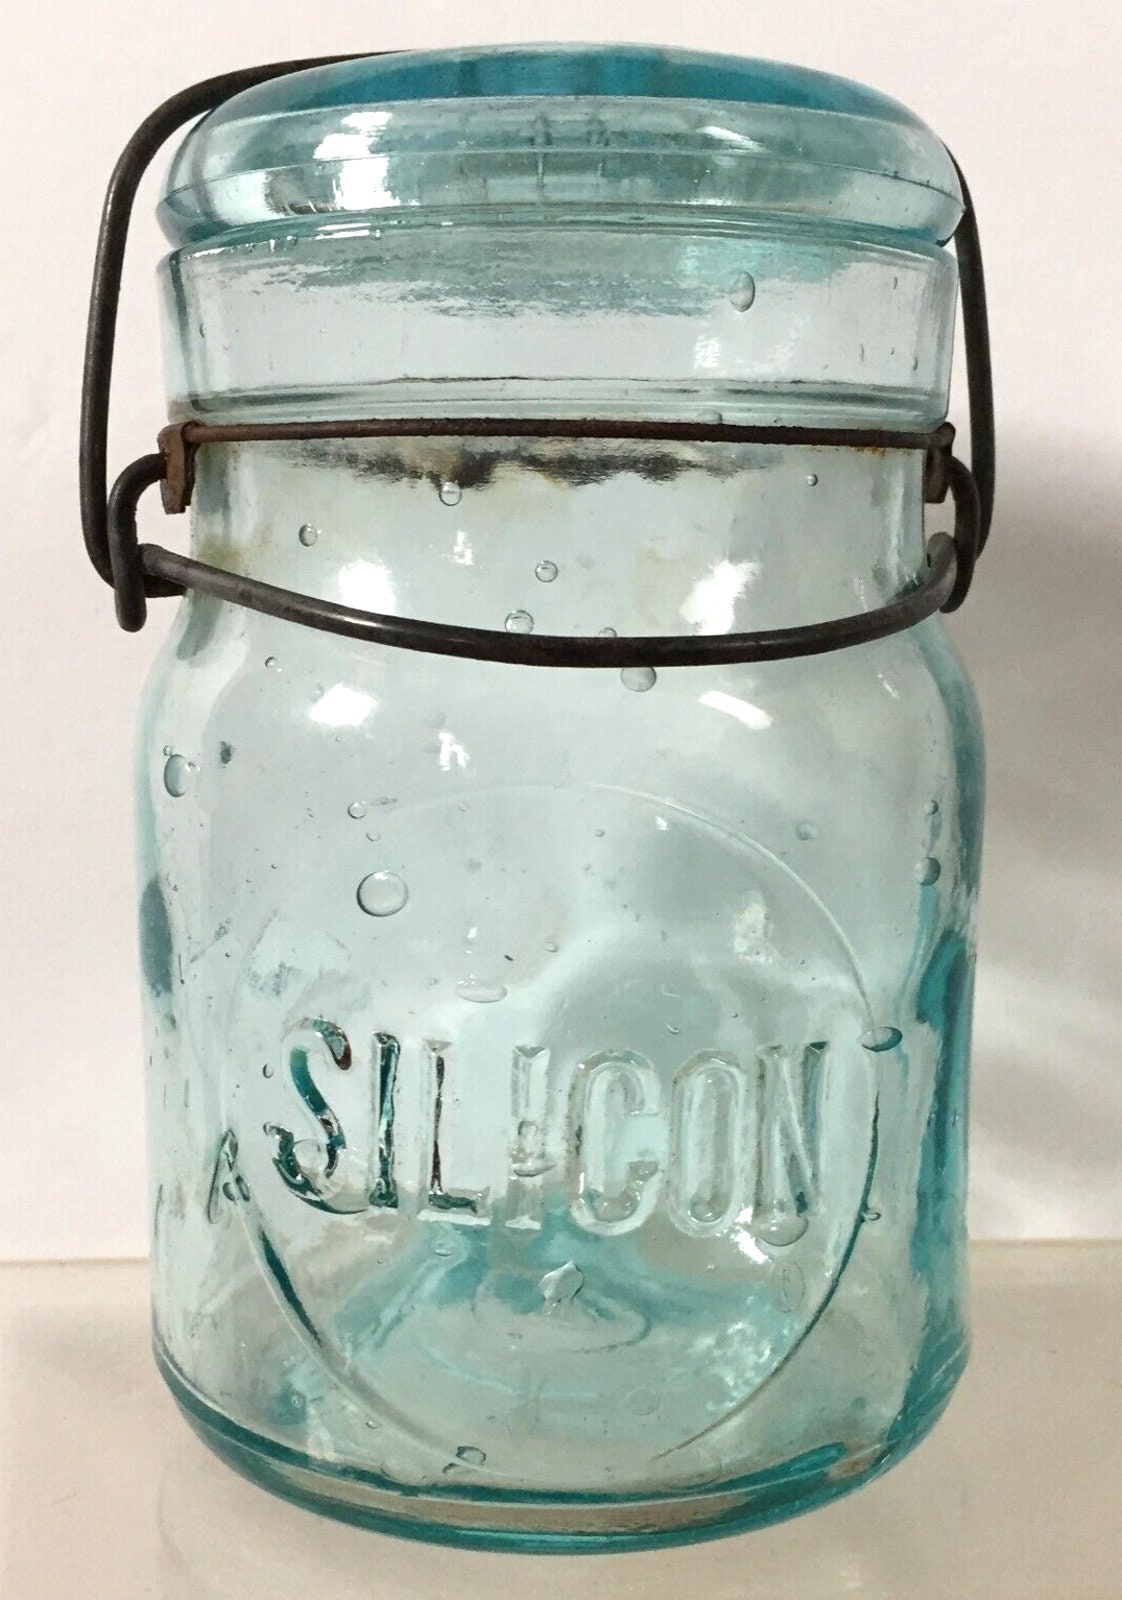 Glass Storage Jars Airtight Clip Top Lid Food Preserve Preserving Jar 70ml  x6